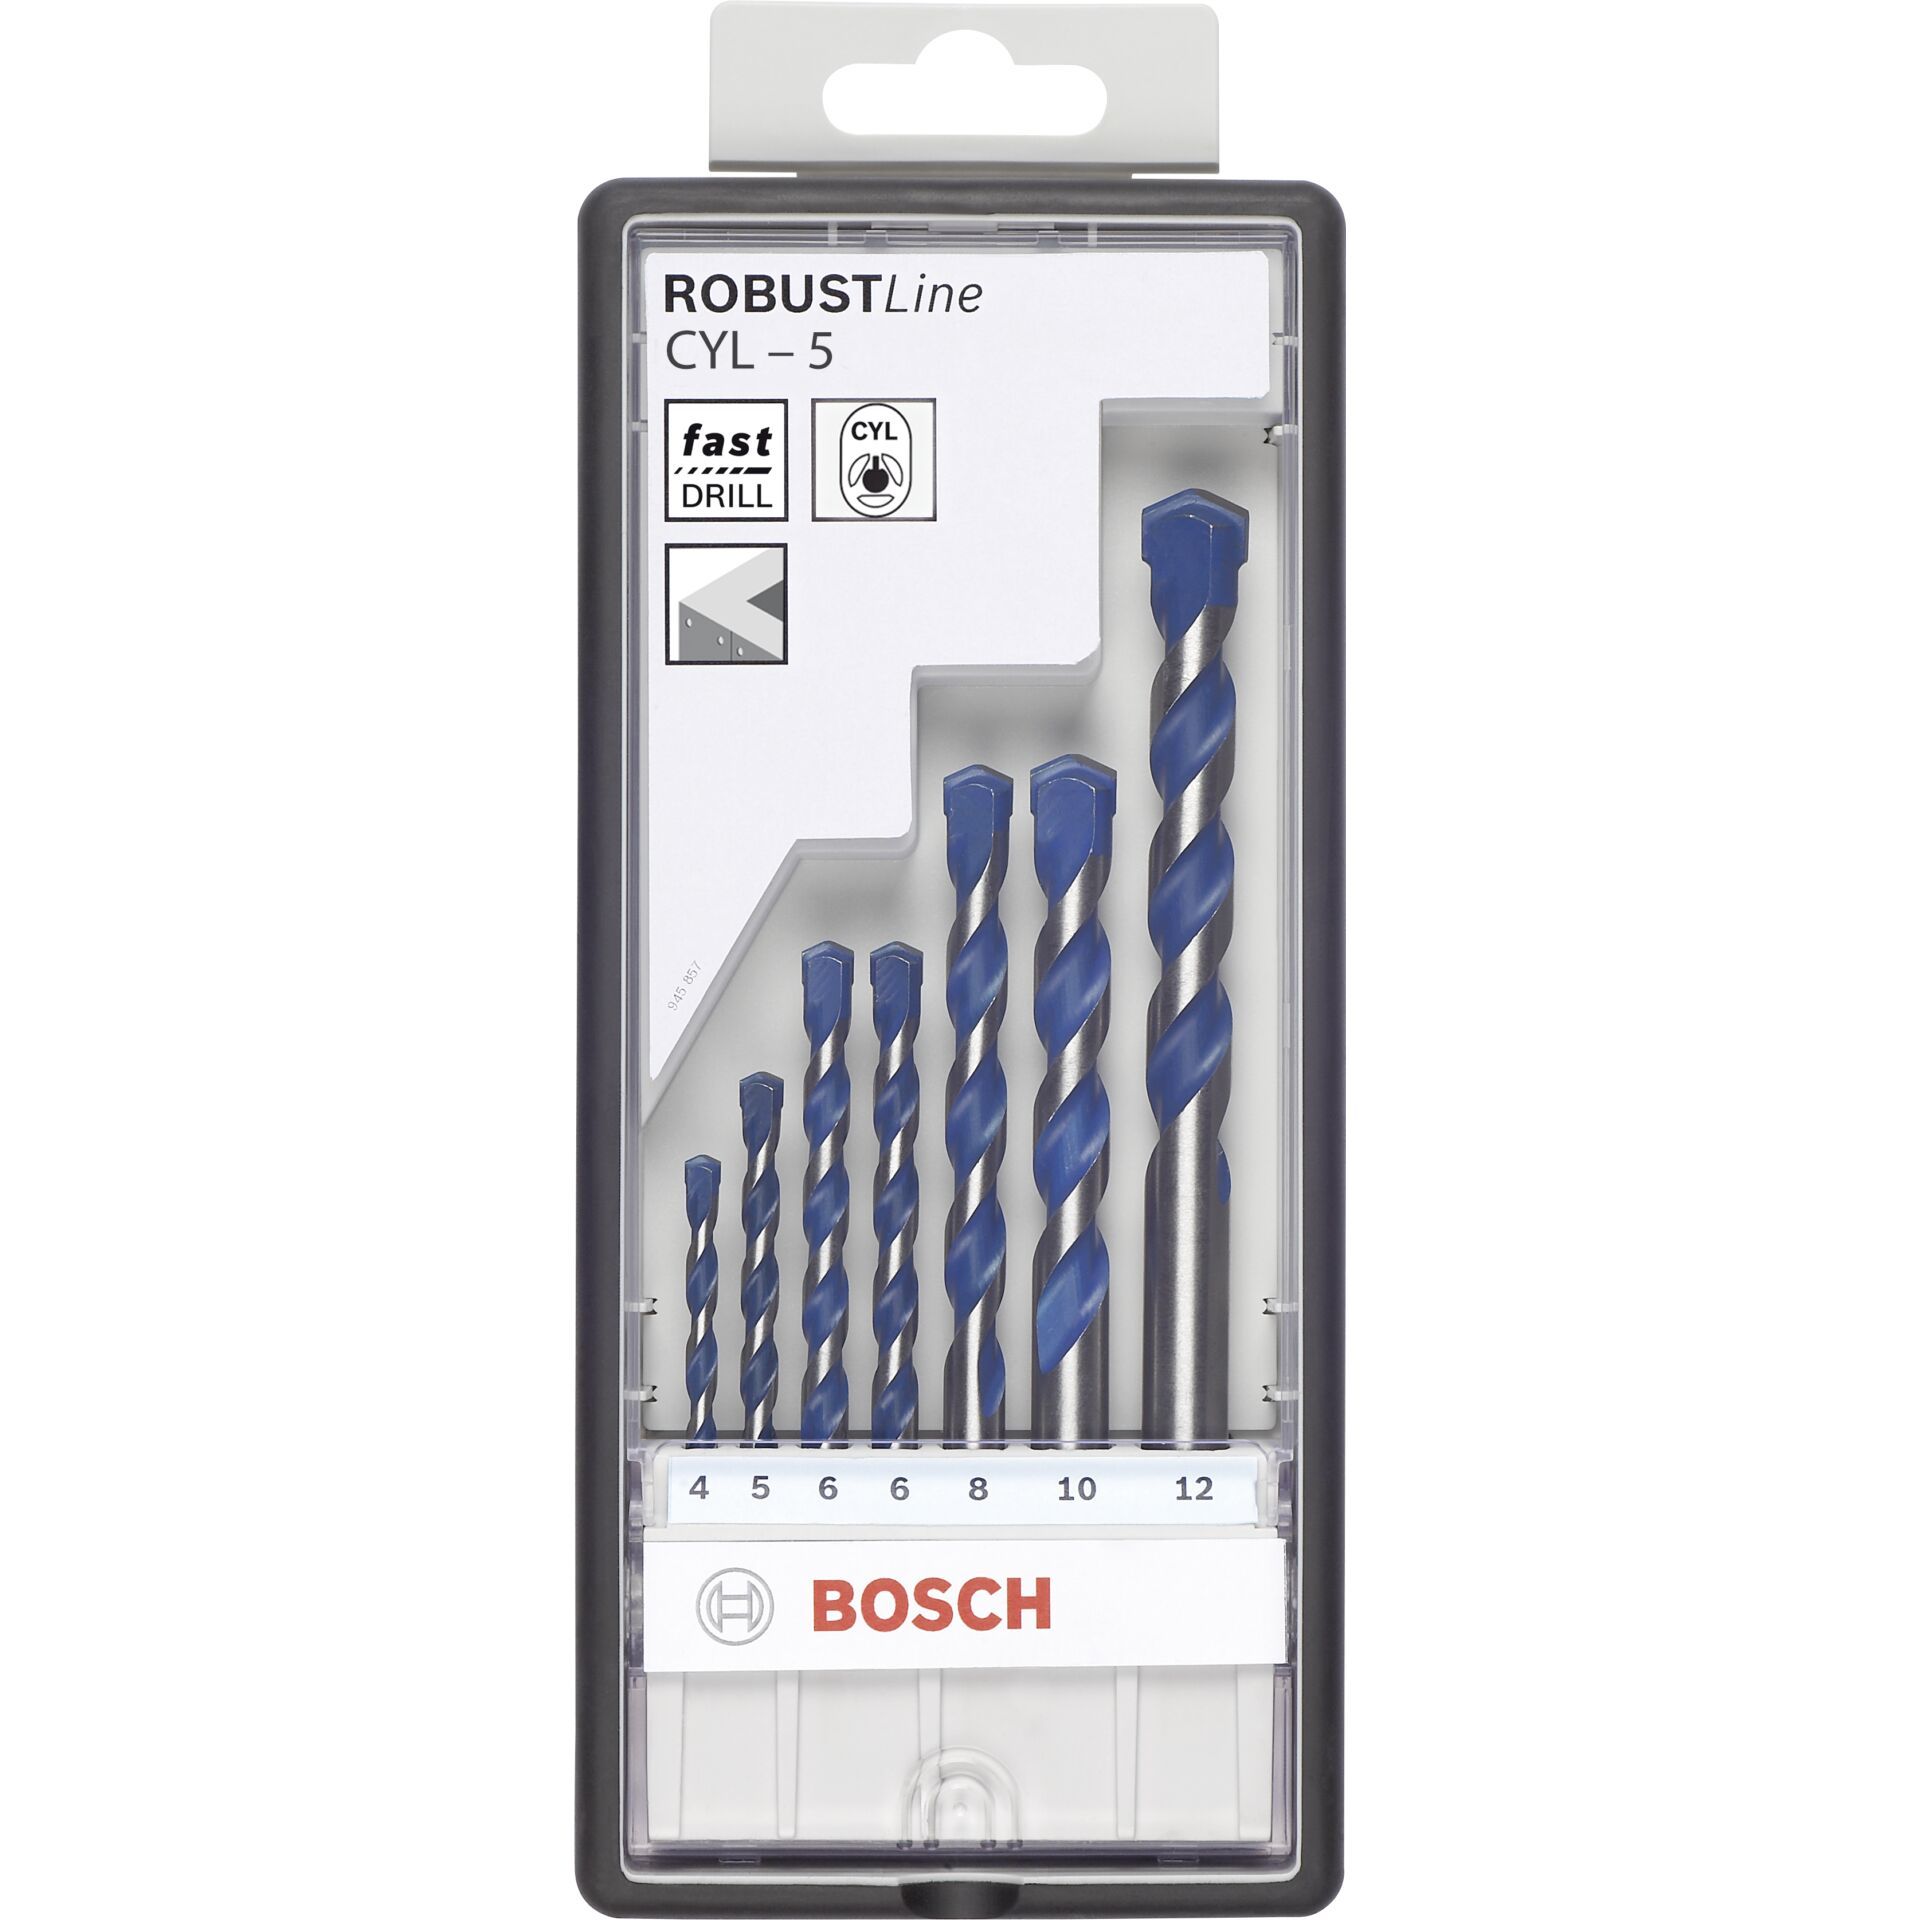 Bosch 7pcs. Robustline Concrete Drill Bit Set CYL-5:4-10mm